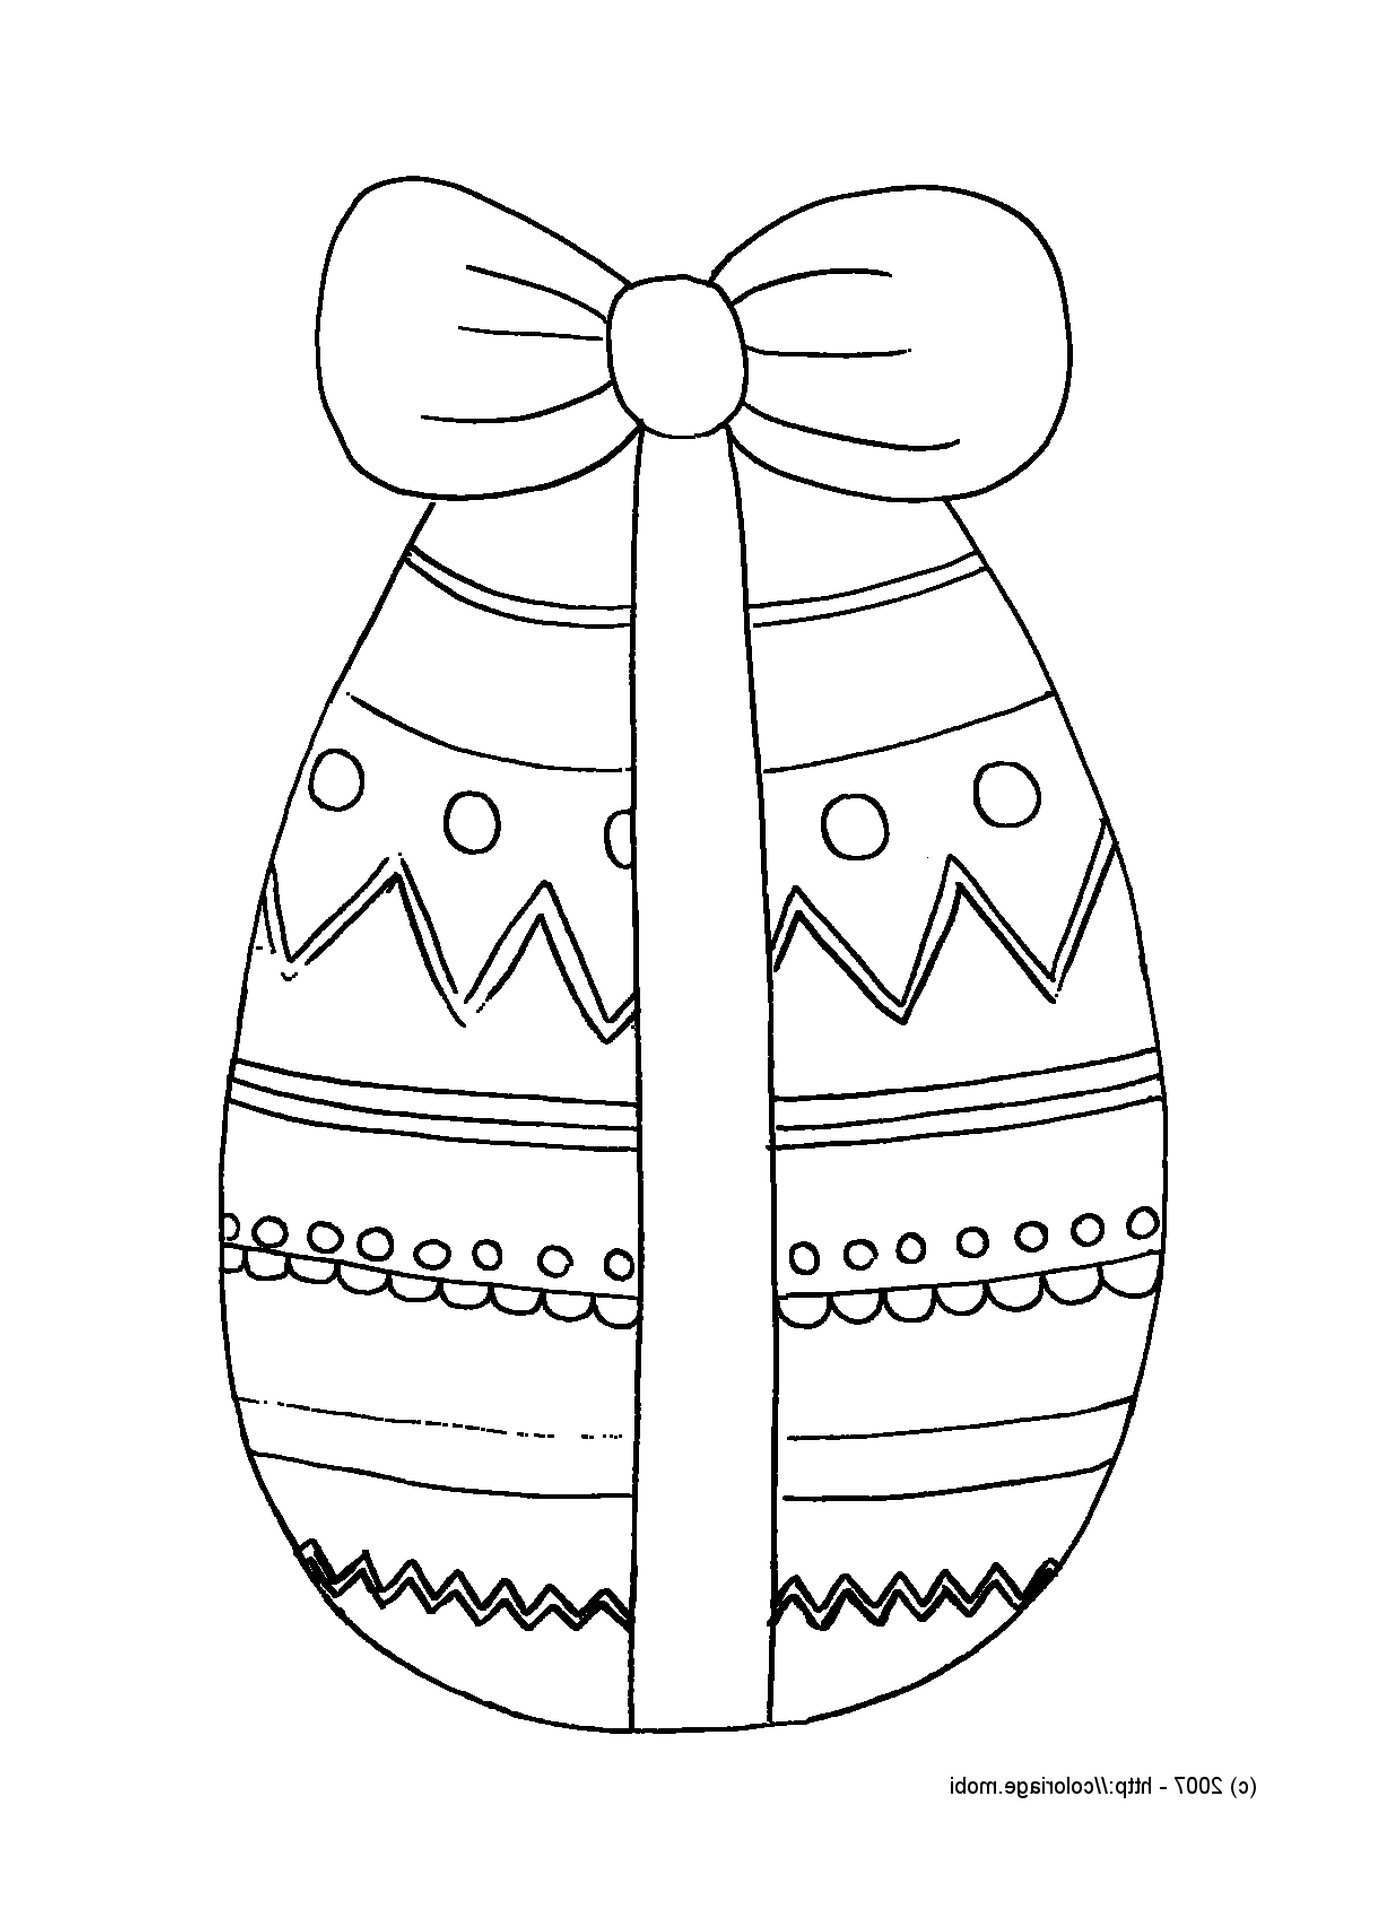  Un huevo de Pascua empacado 